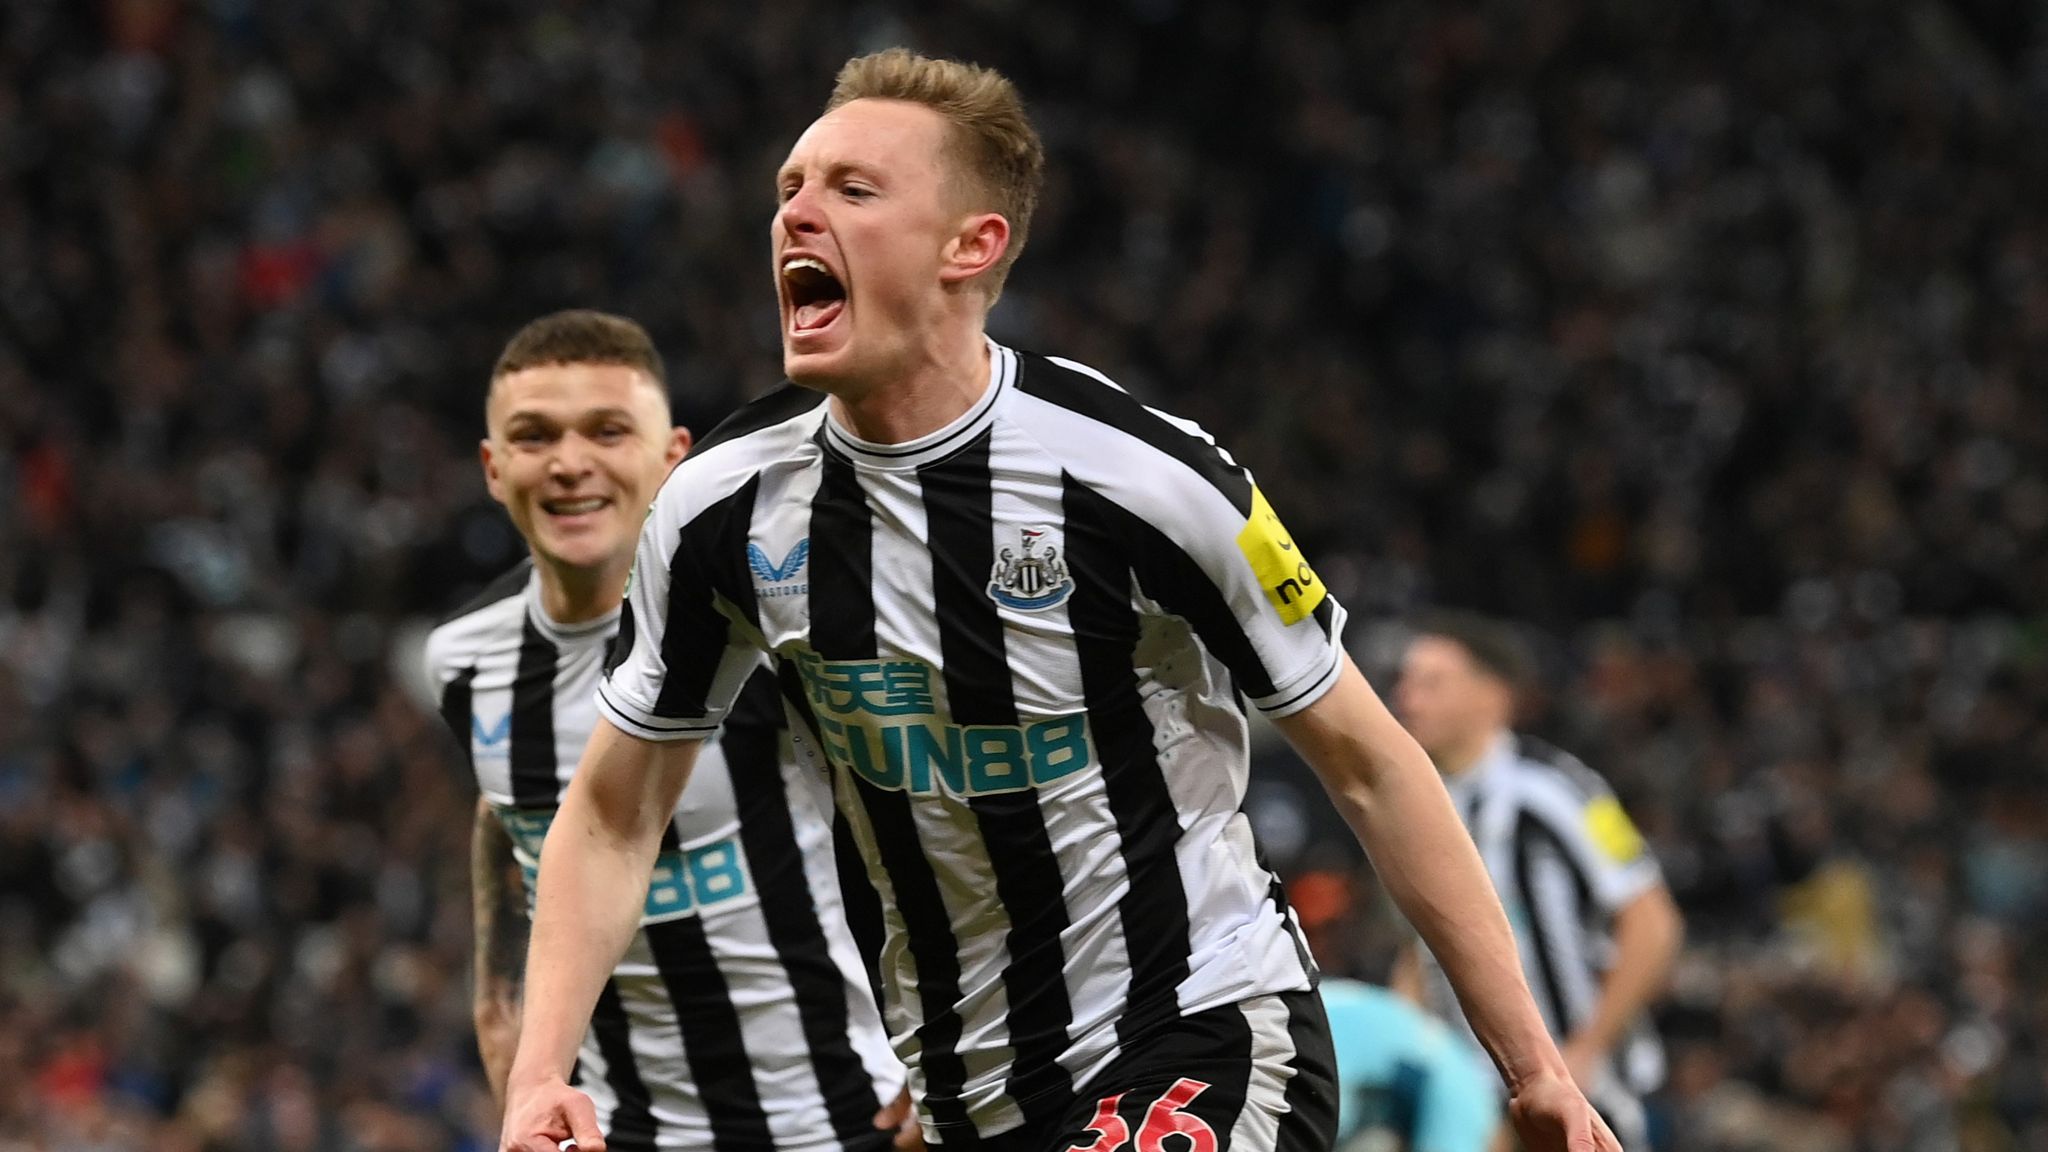 Jamie Redknapp finally reveals the wonderful kid that is making Newcastle winning games